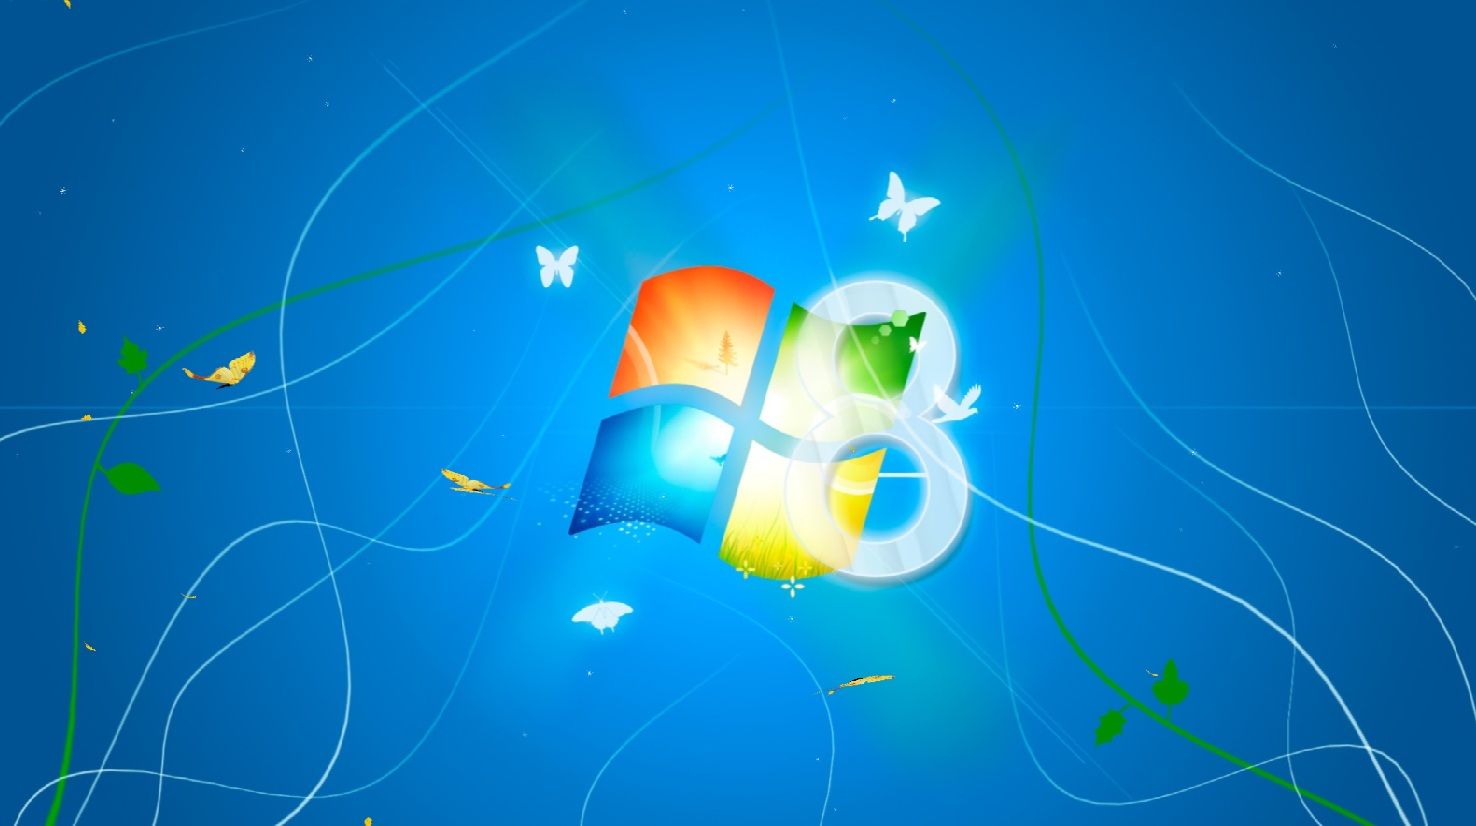 Download Windows 8 Light Animated Wallpaper DesktopAnimated.com